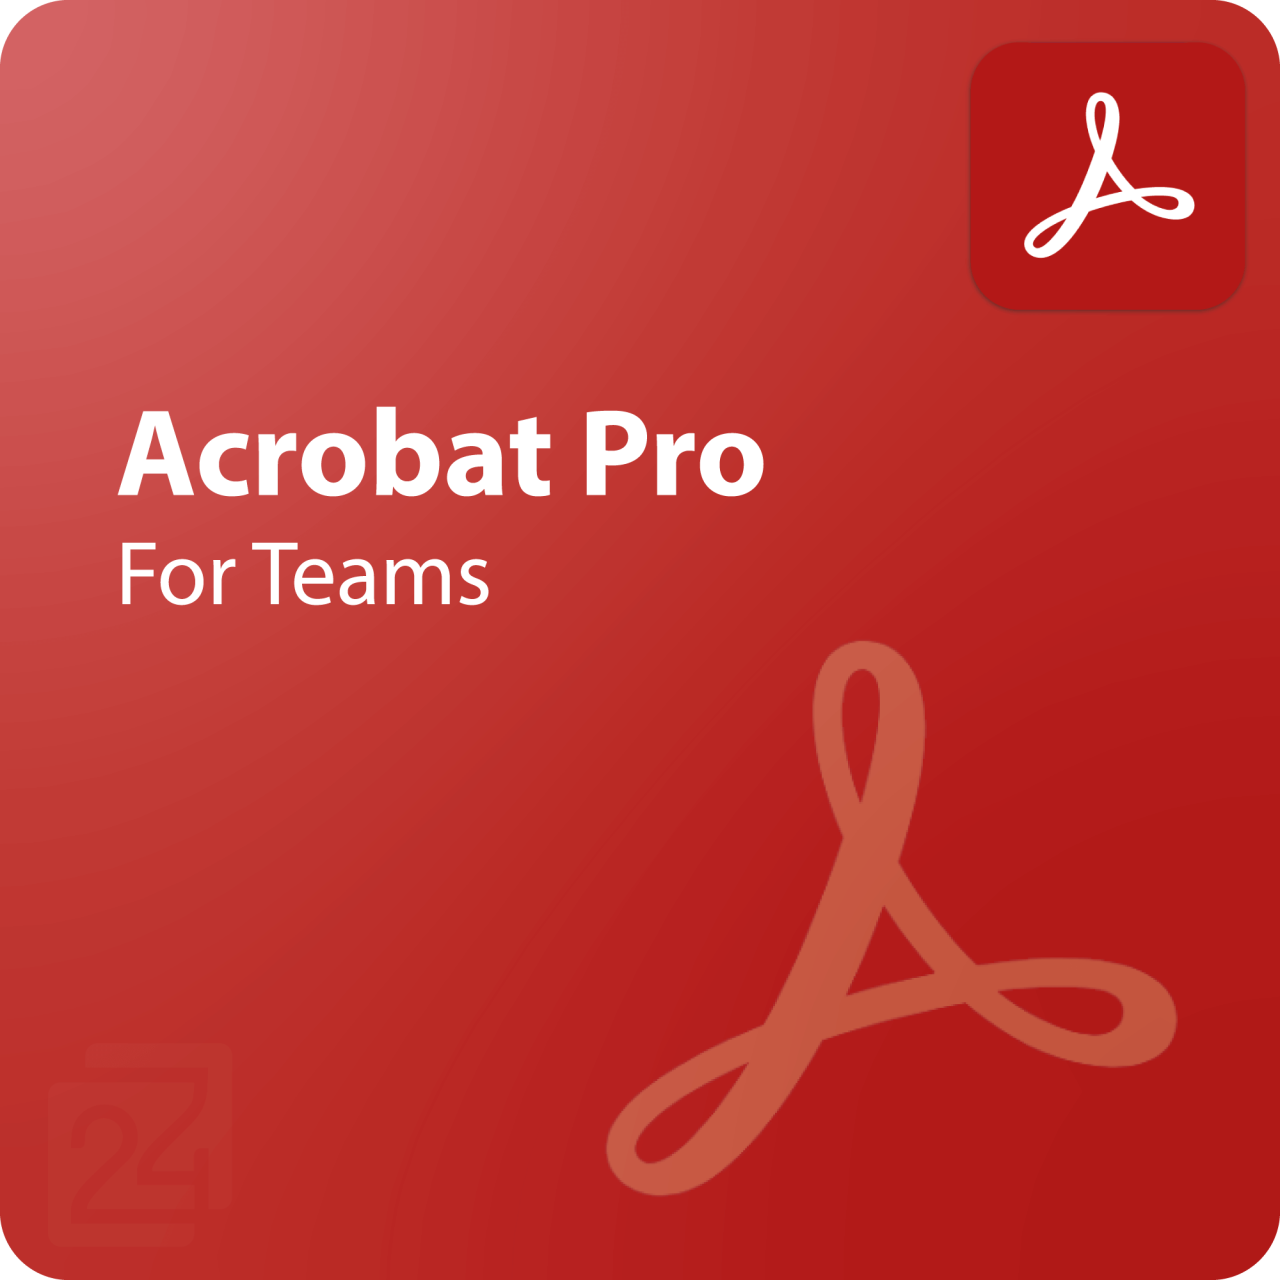 Acrobat Pro for Teams